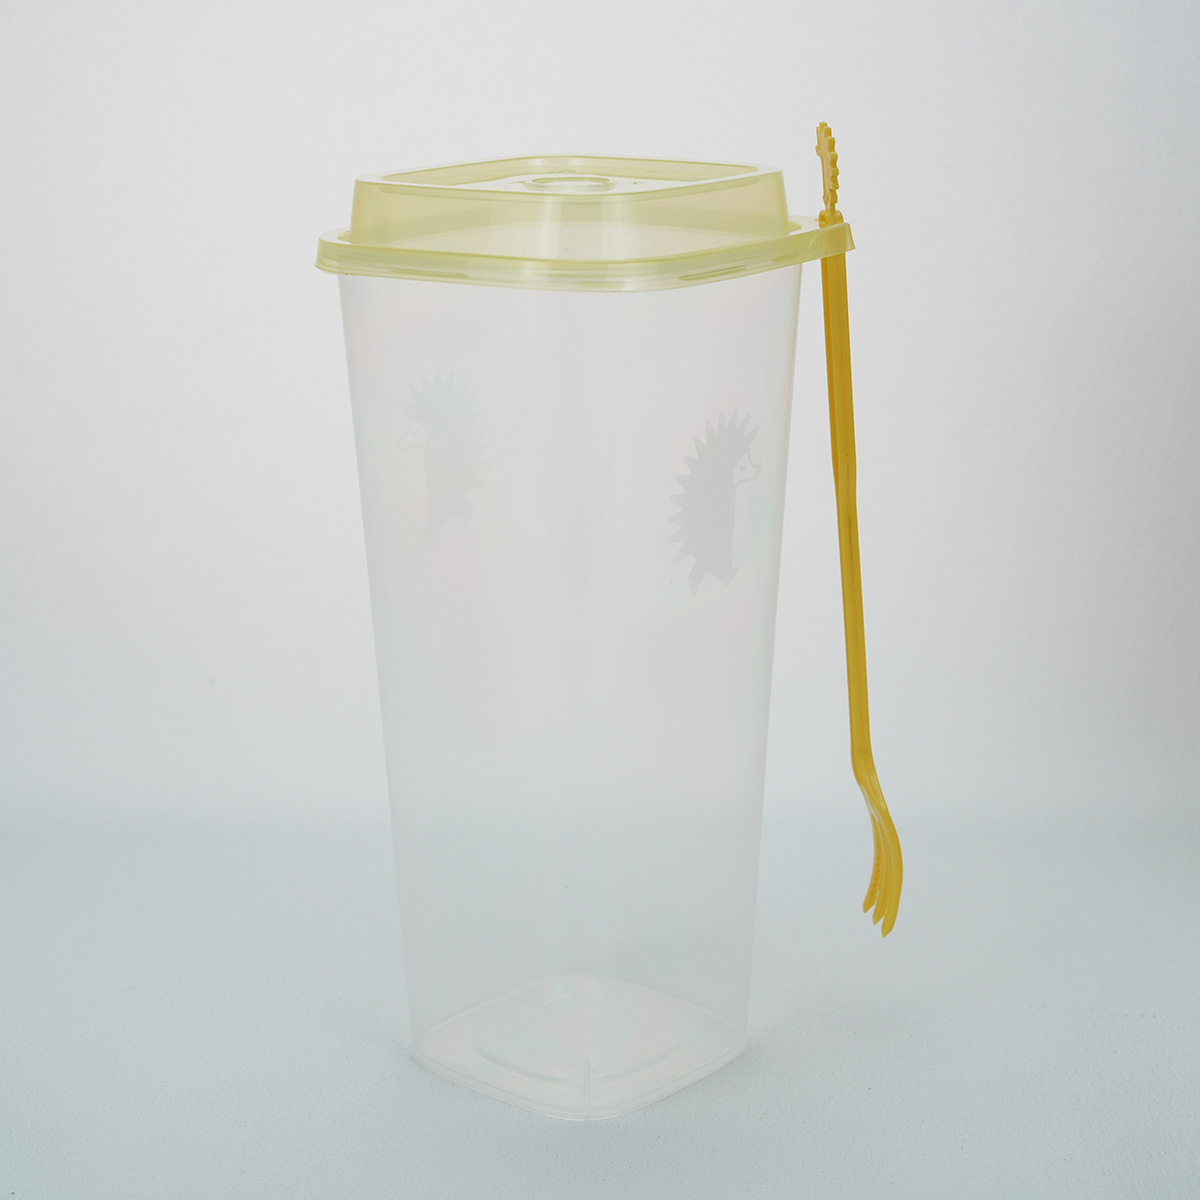 प्लास्टिक कप (3)